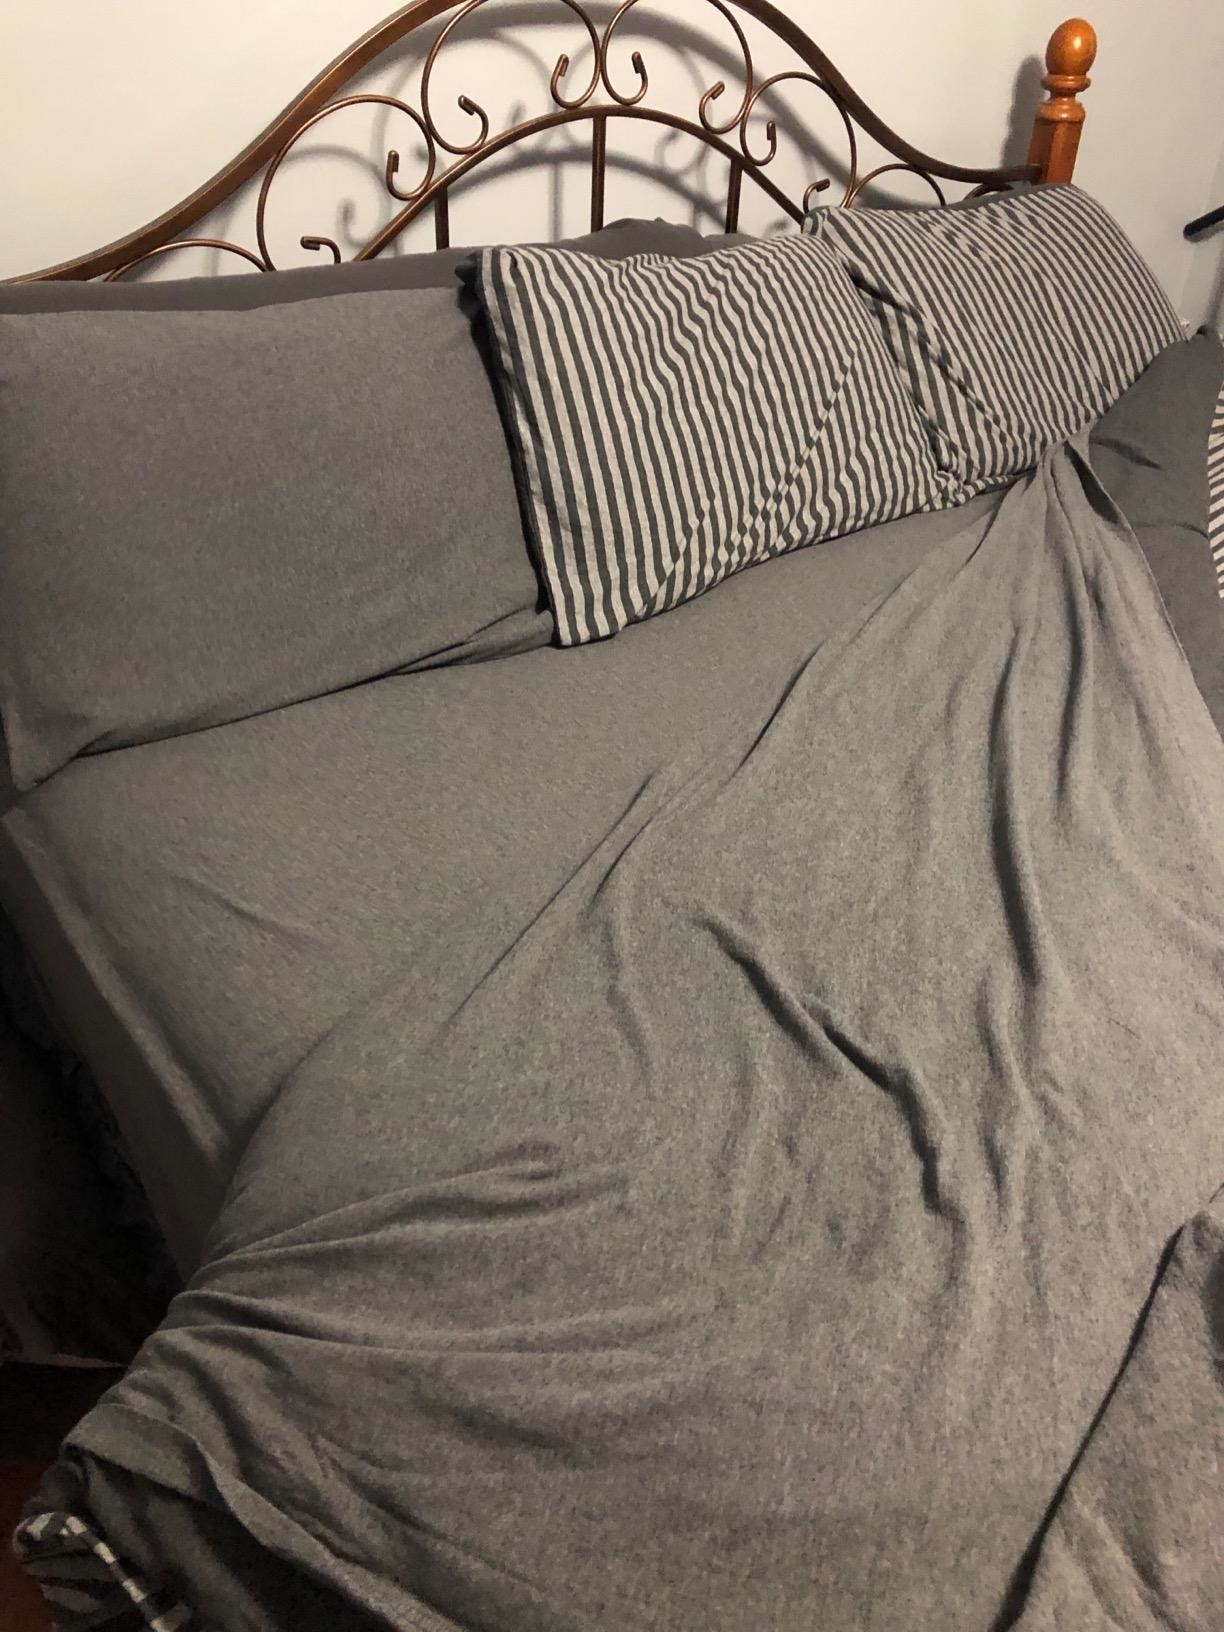 jersey bed sheets walmart